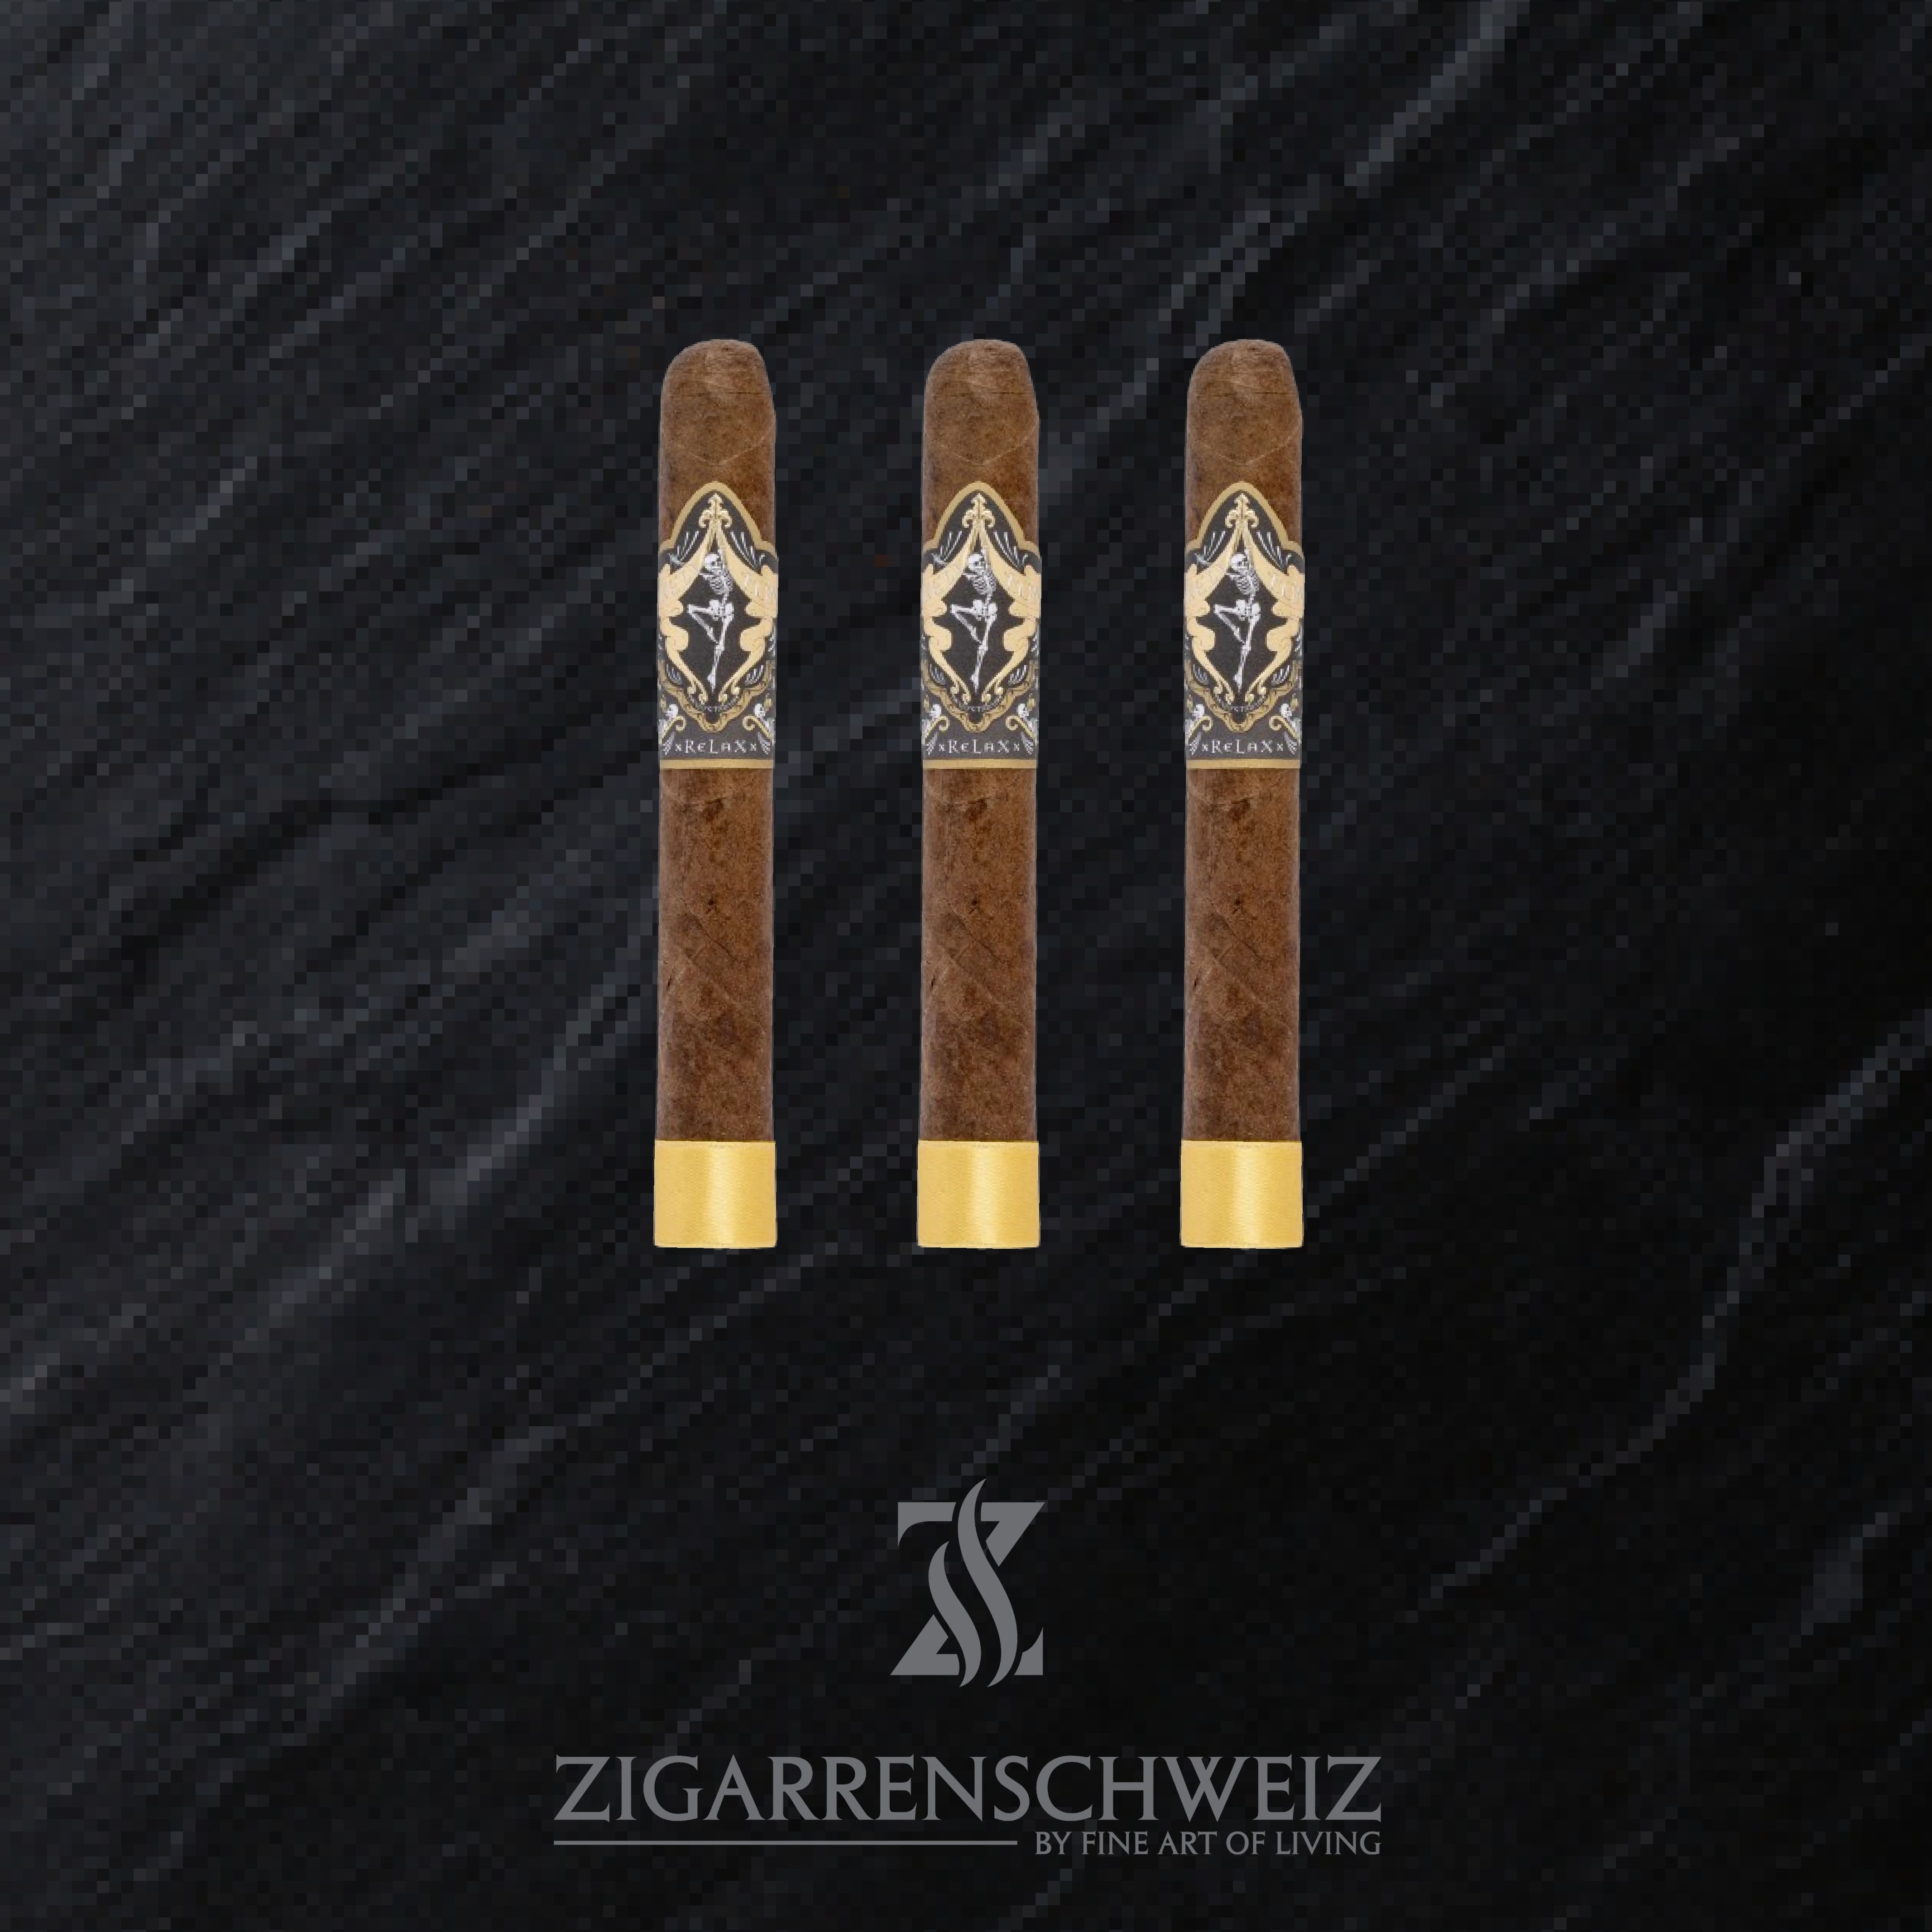 Skel Ton x RELAX x Toro Zigarren 3er Etui von Zigarren Schweiz